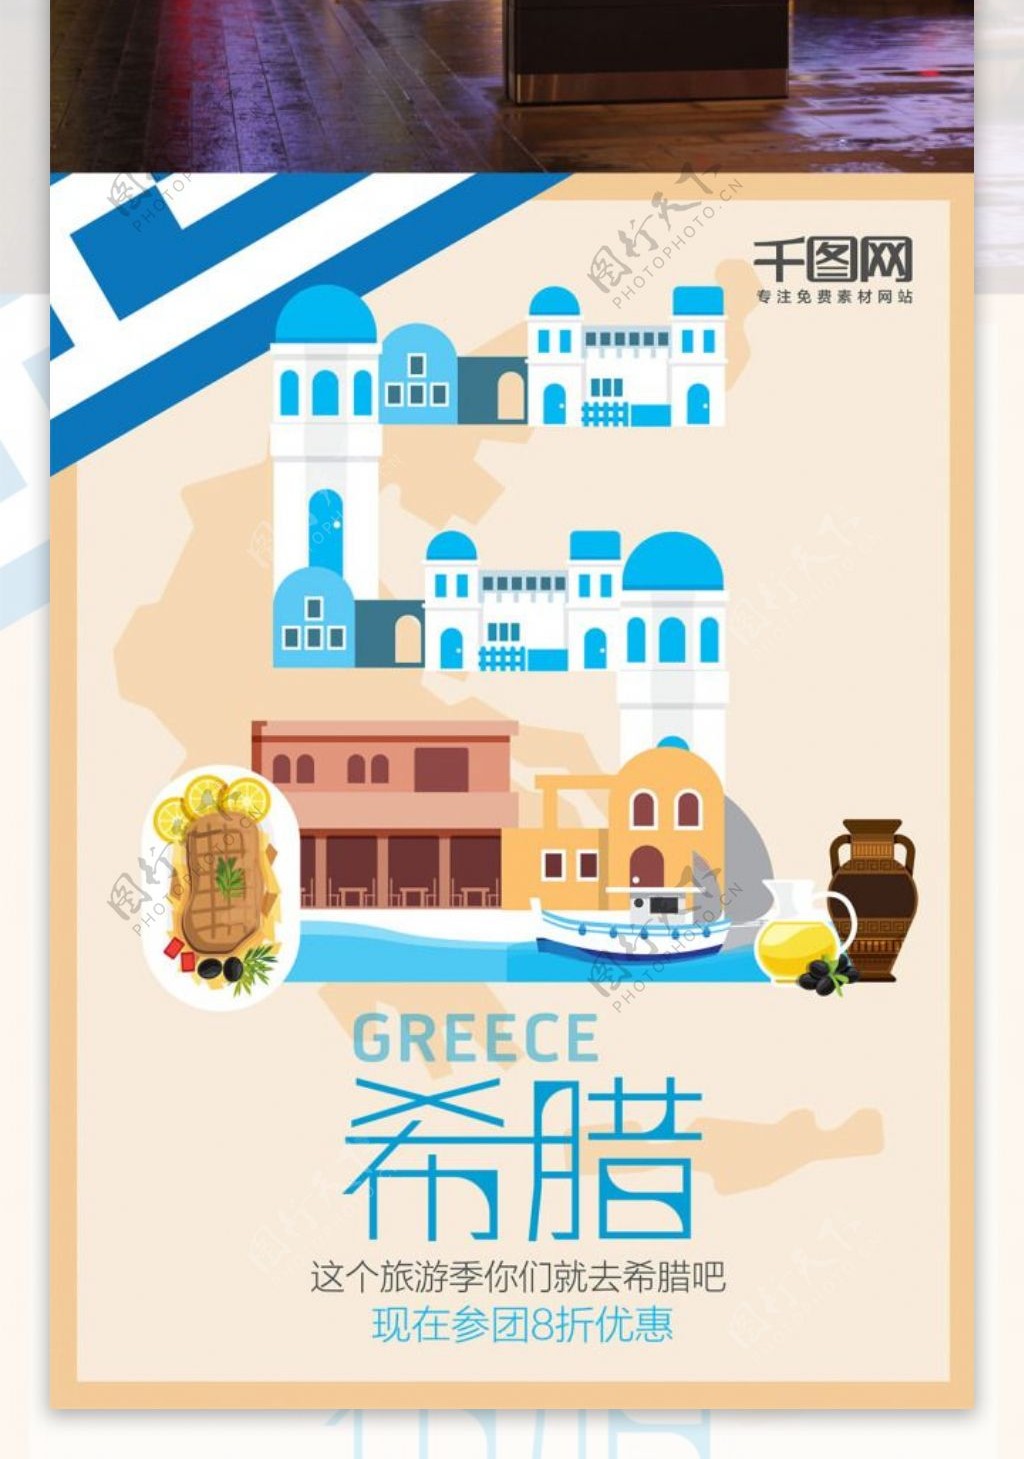 S字母希腊旅游海报设计